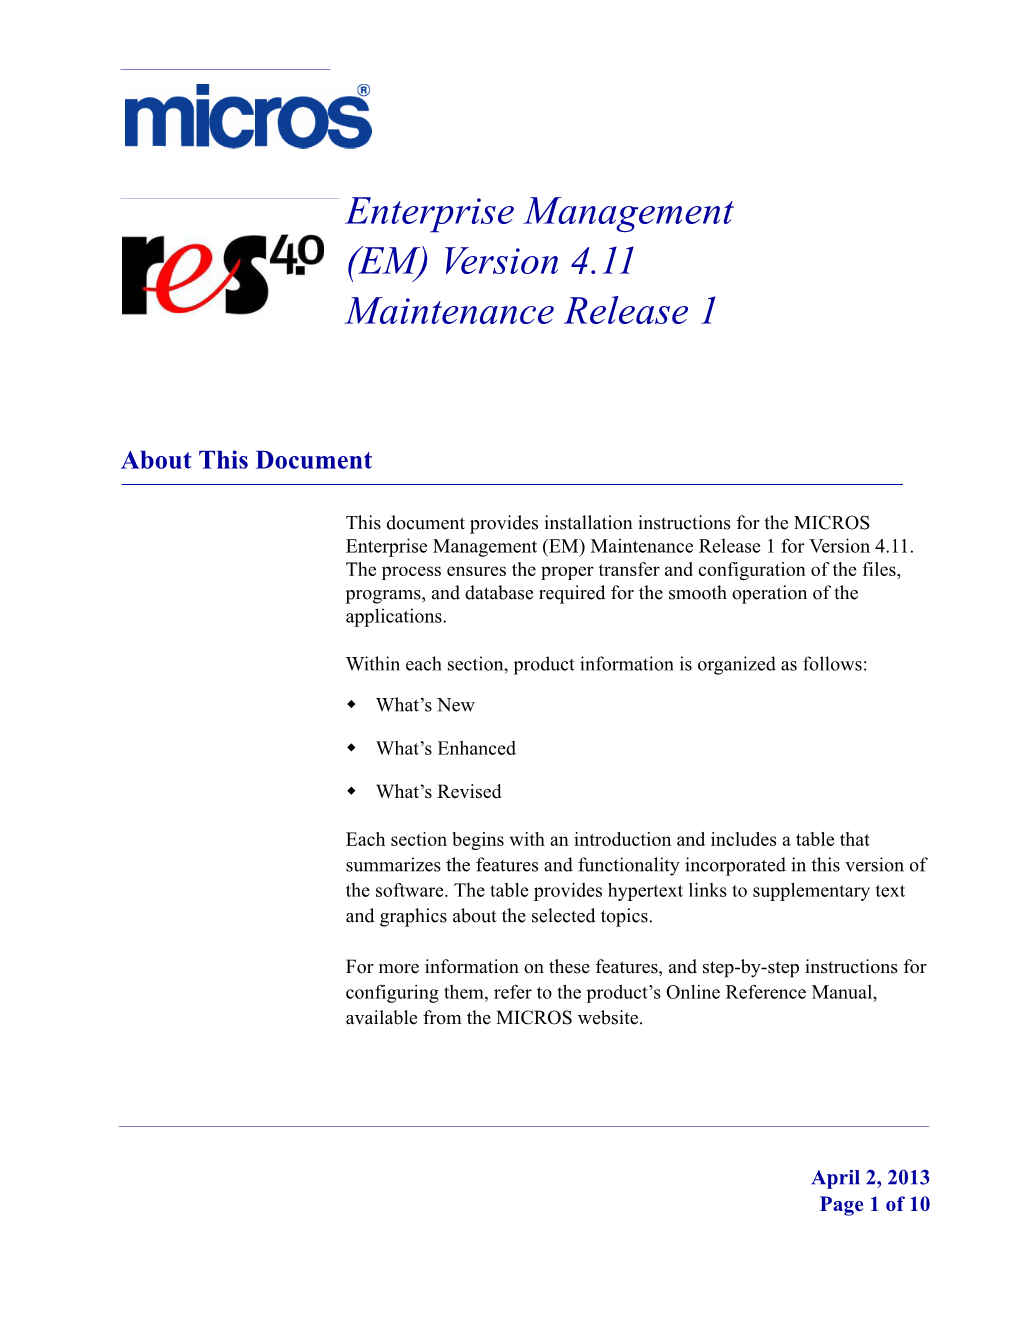 Enterprise Management (EM) Version 4.11 Maintenance Release 1